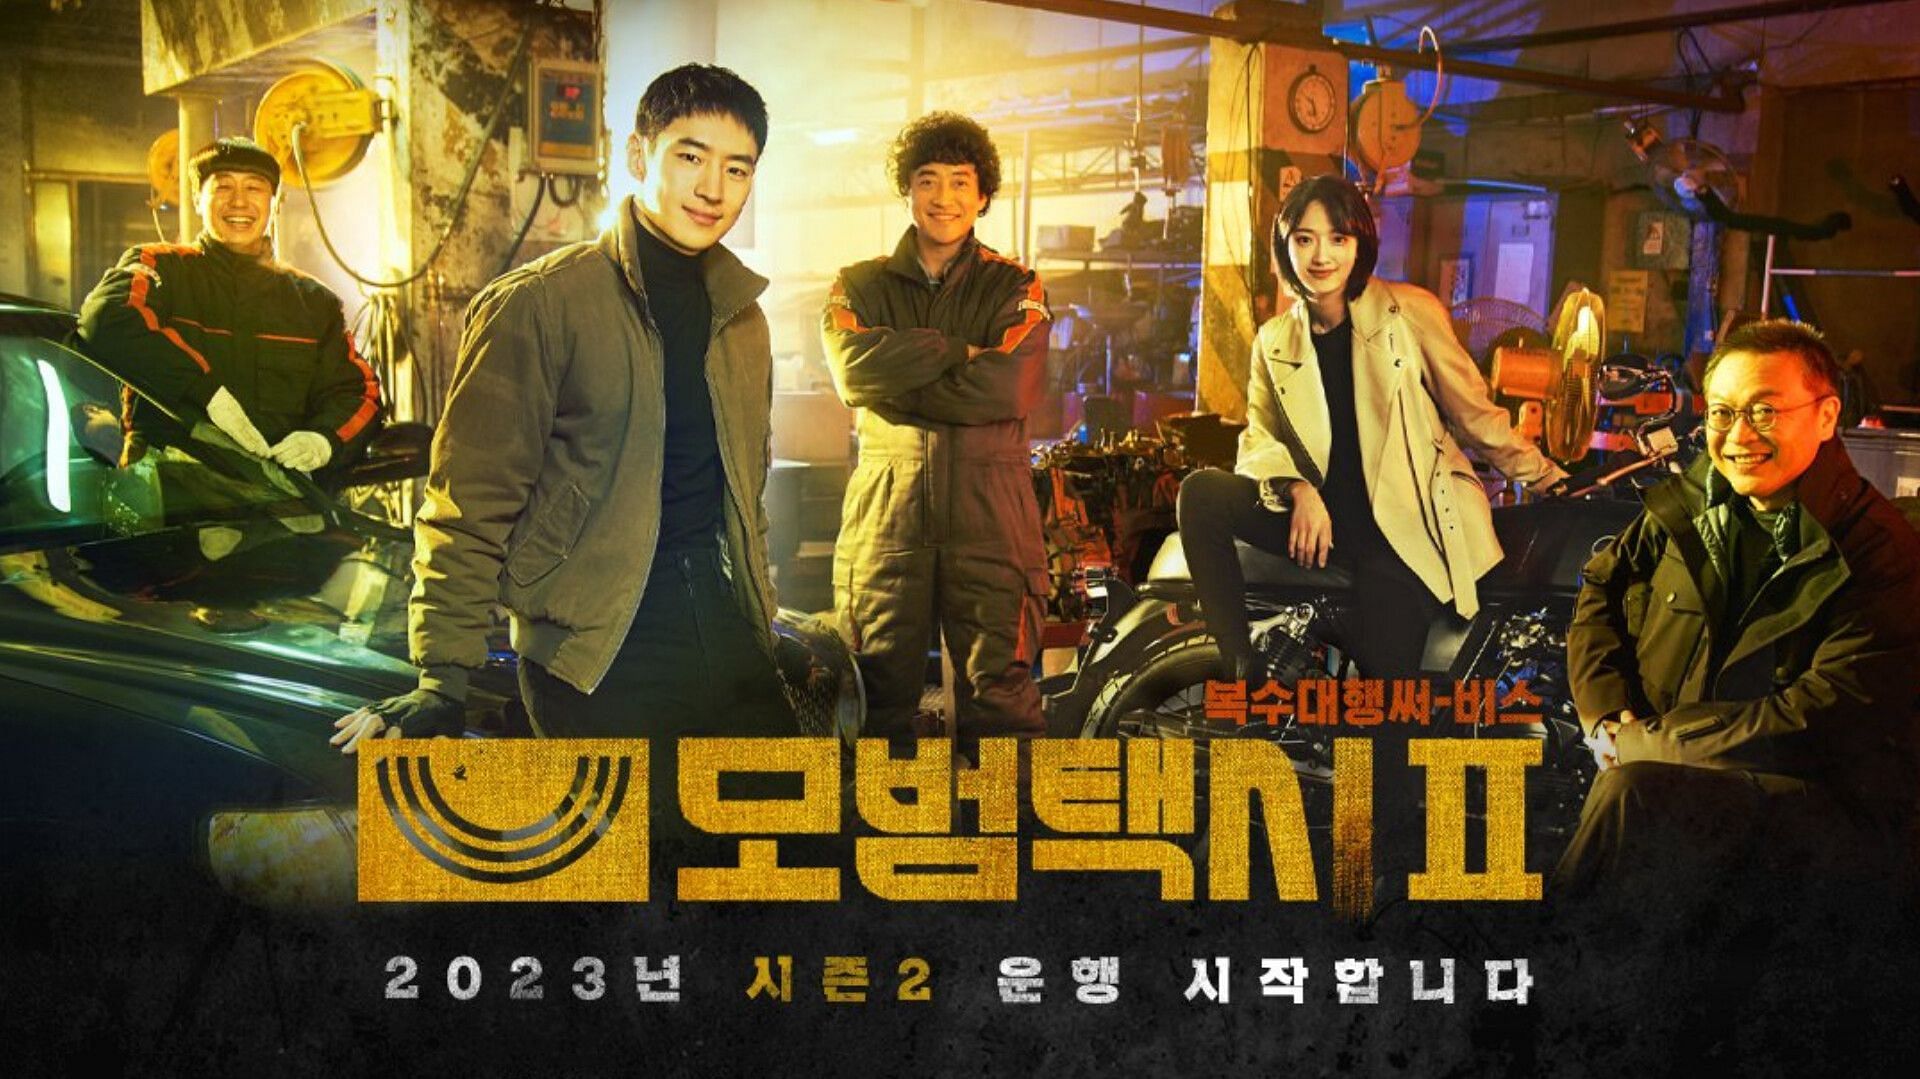 Featuring Lee Je-hoon, Kim Eui-sung, Pyo Ye-jin, Jang Hyuk-jin, and Bae Yoo-ram (Image via SBS)